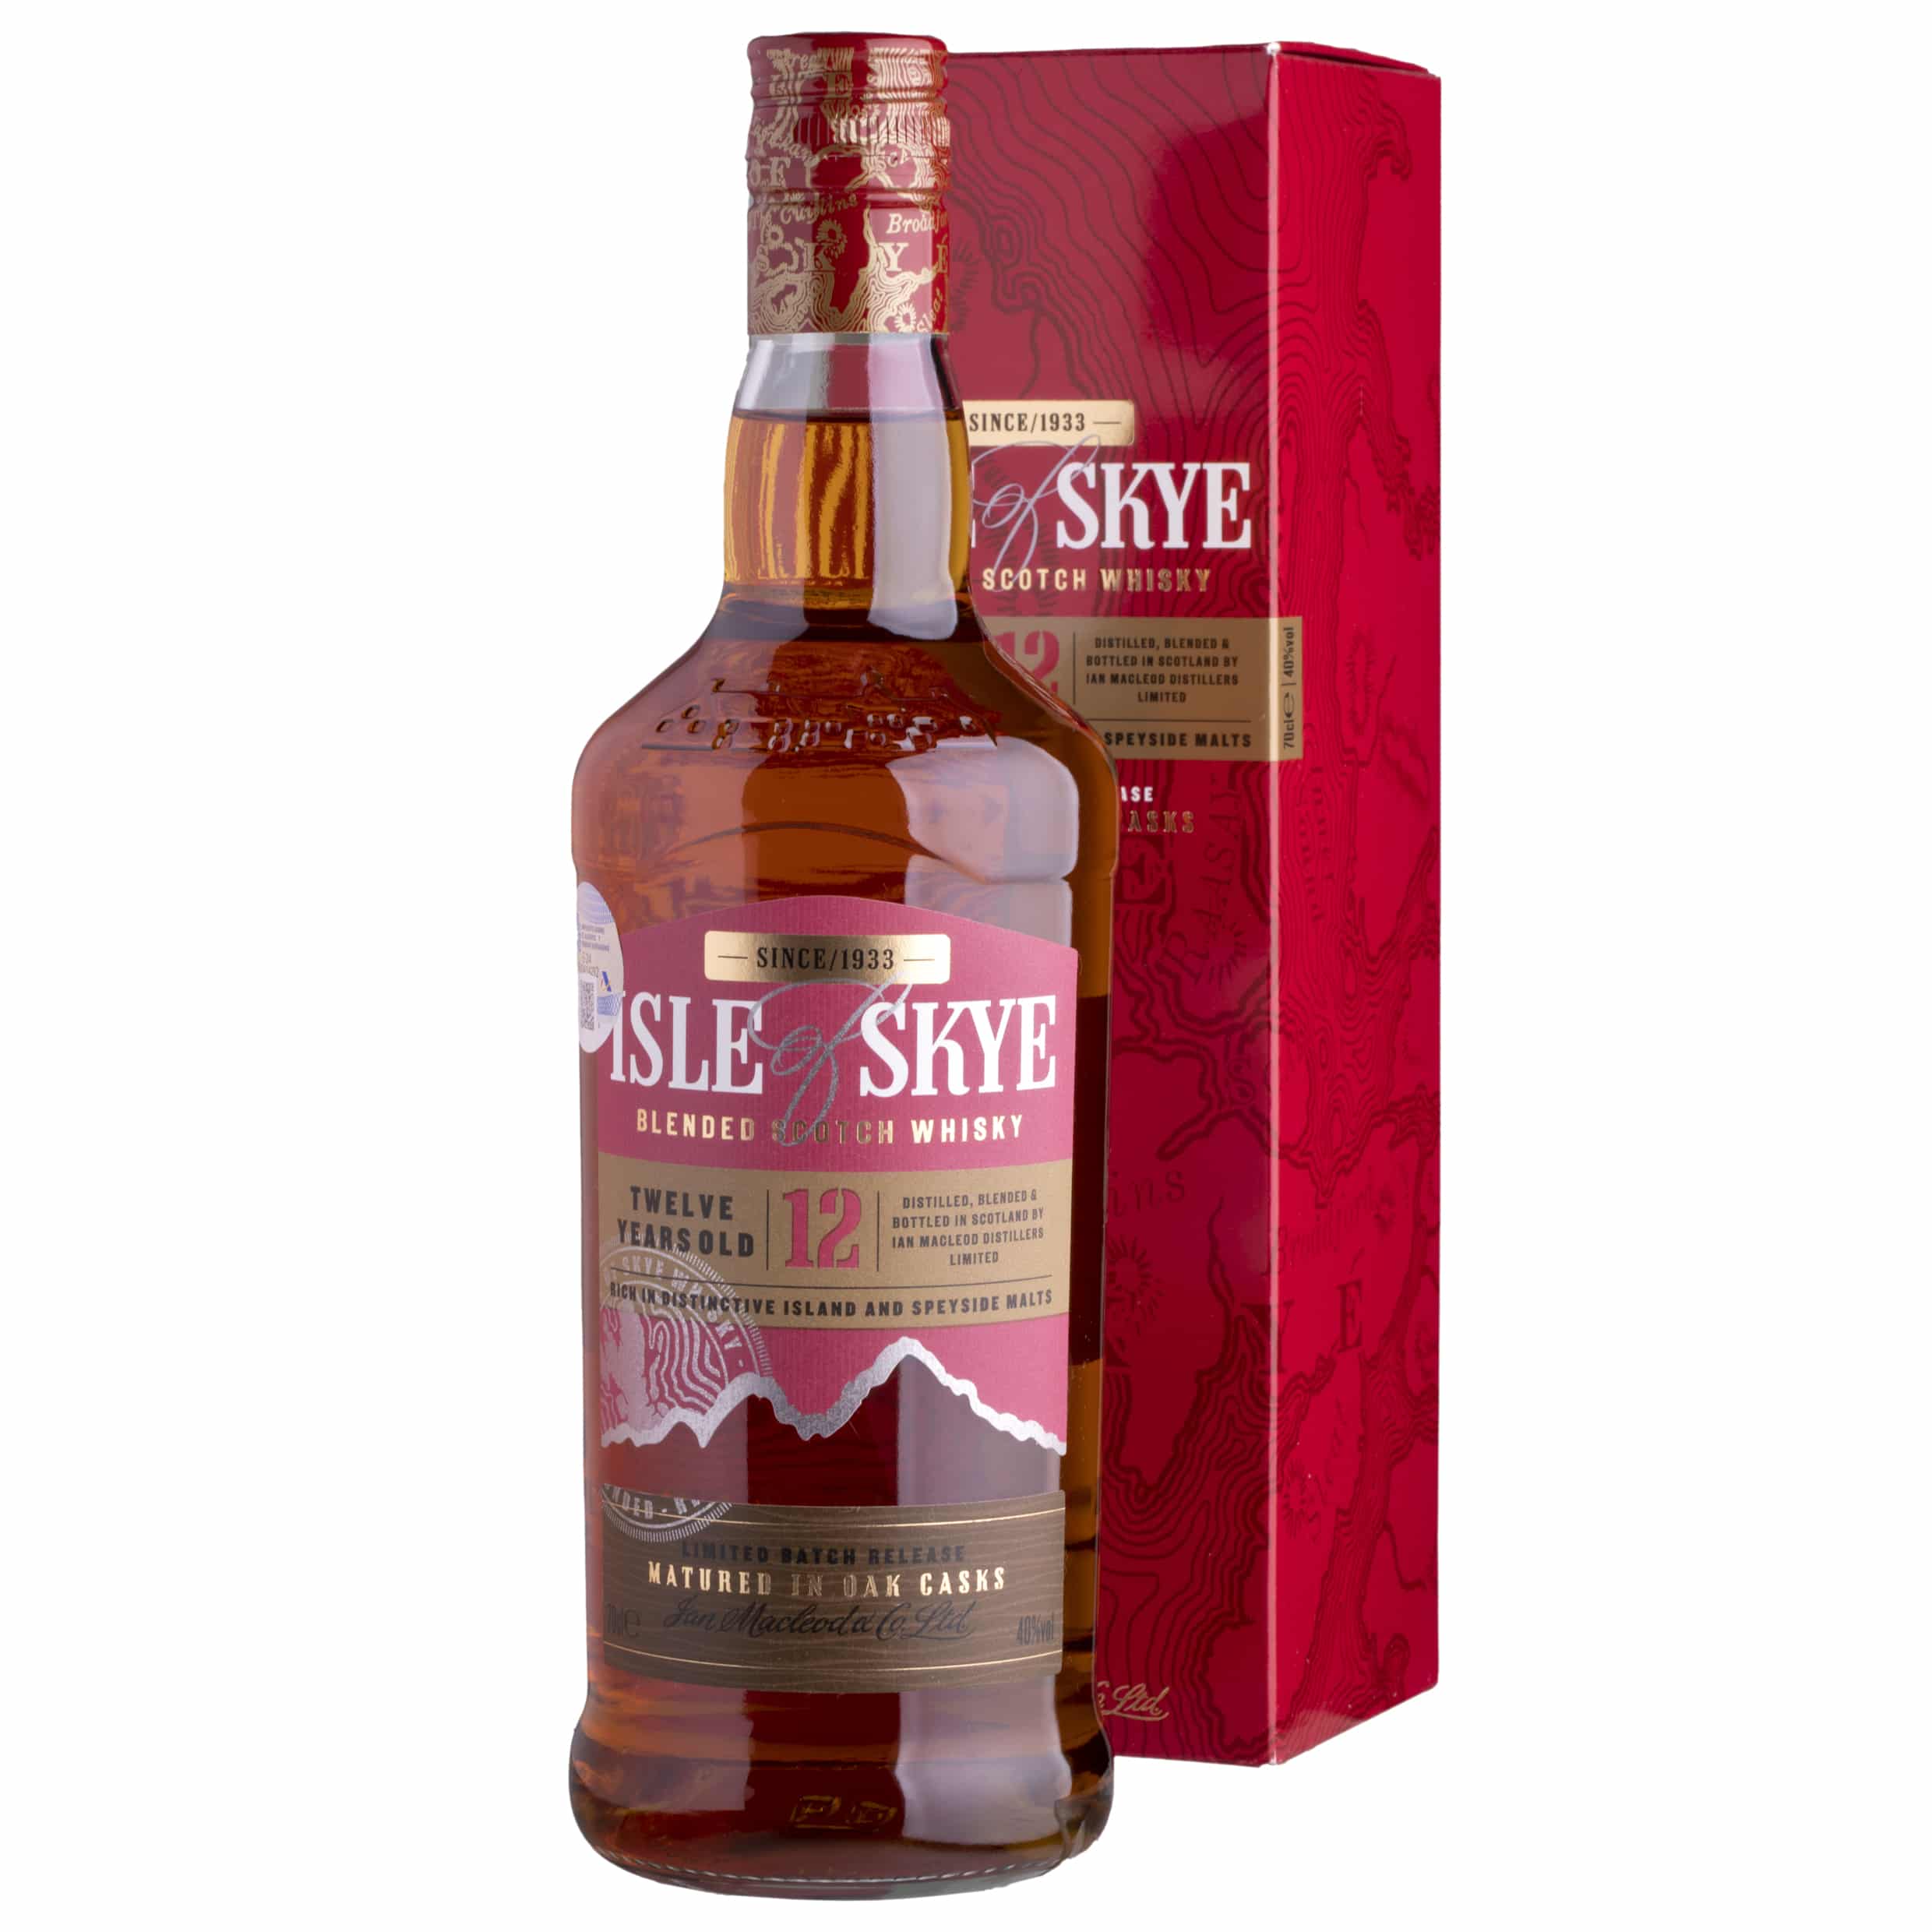 Whisky Isle of Skye 12 YO Blended Scotch Whisky 40%